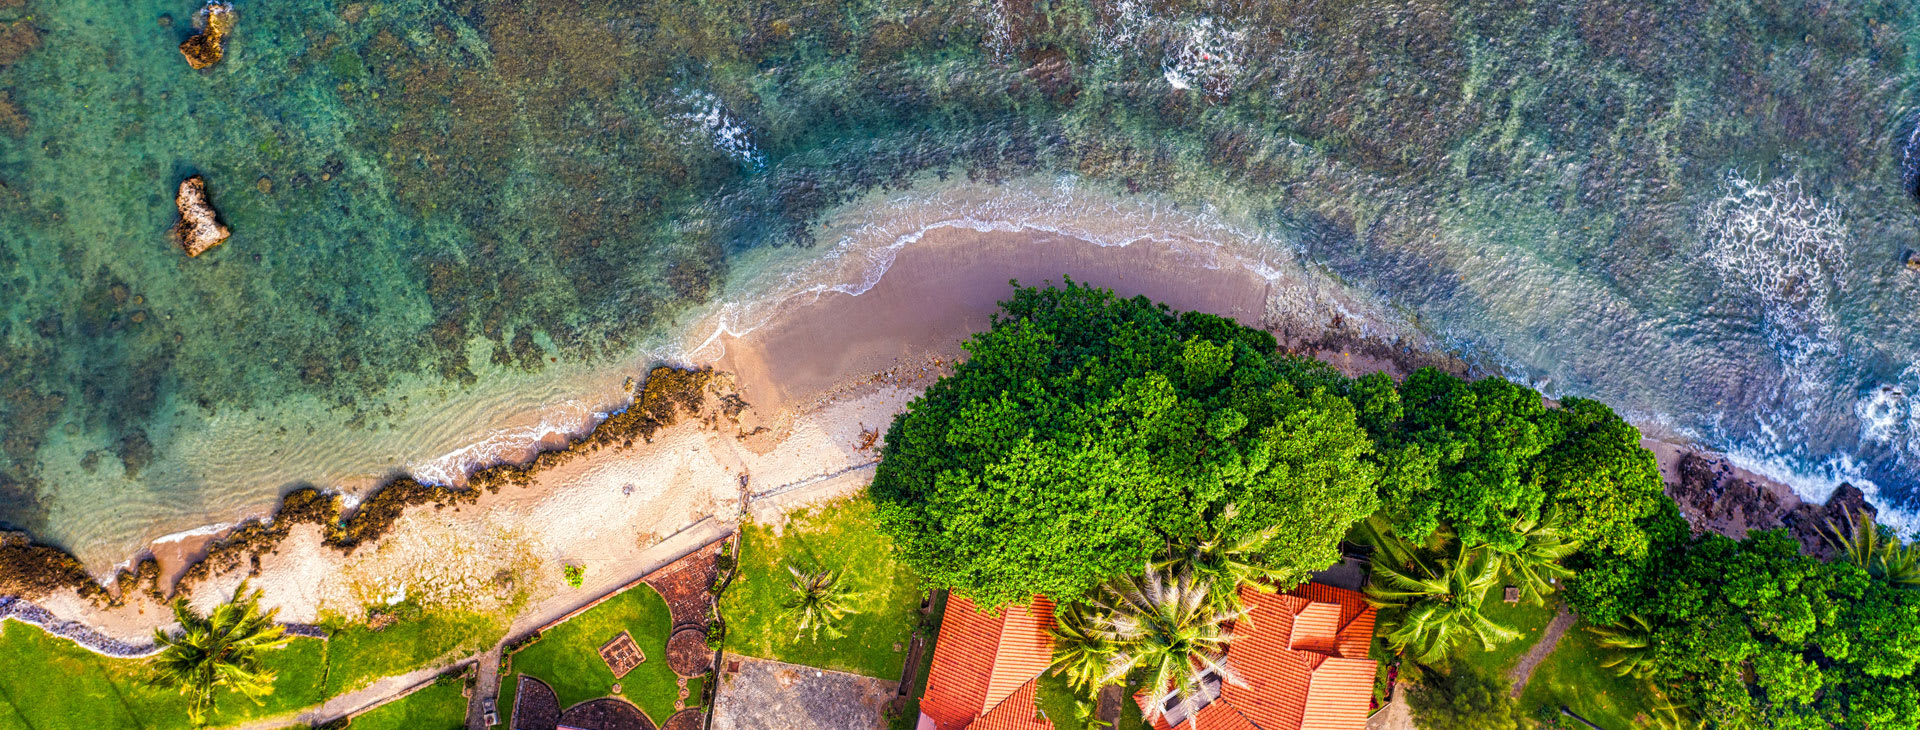 Beach Indonesia aerial view